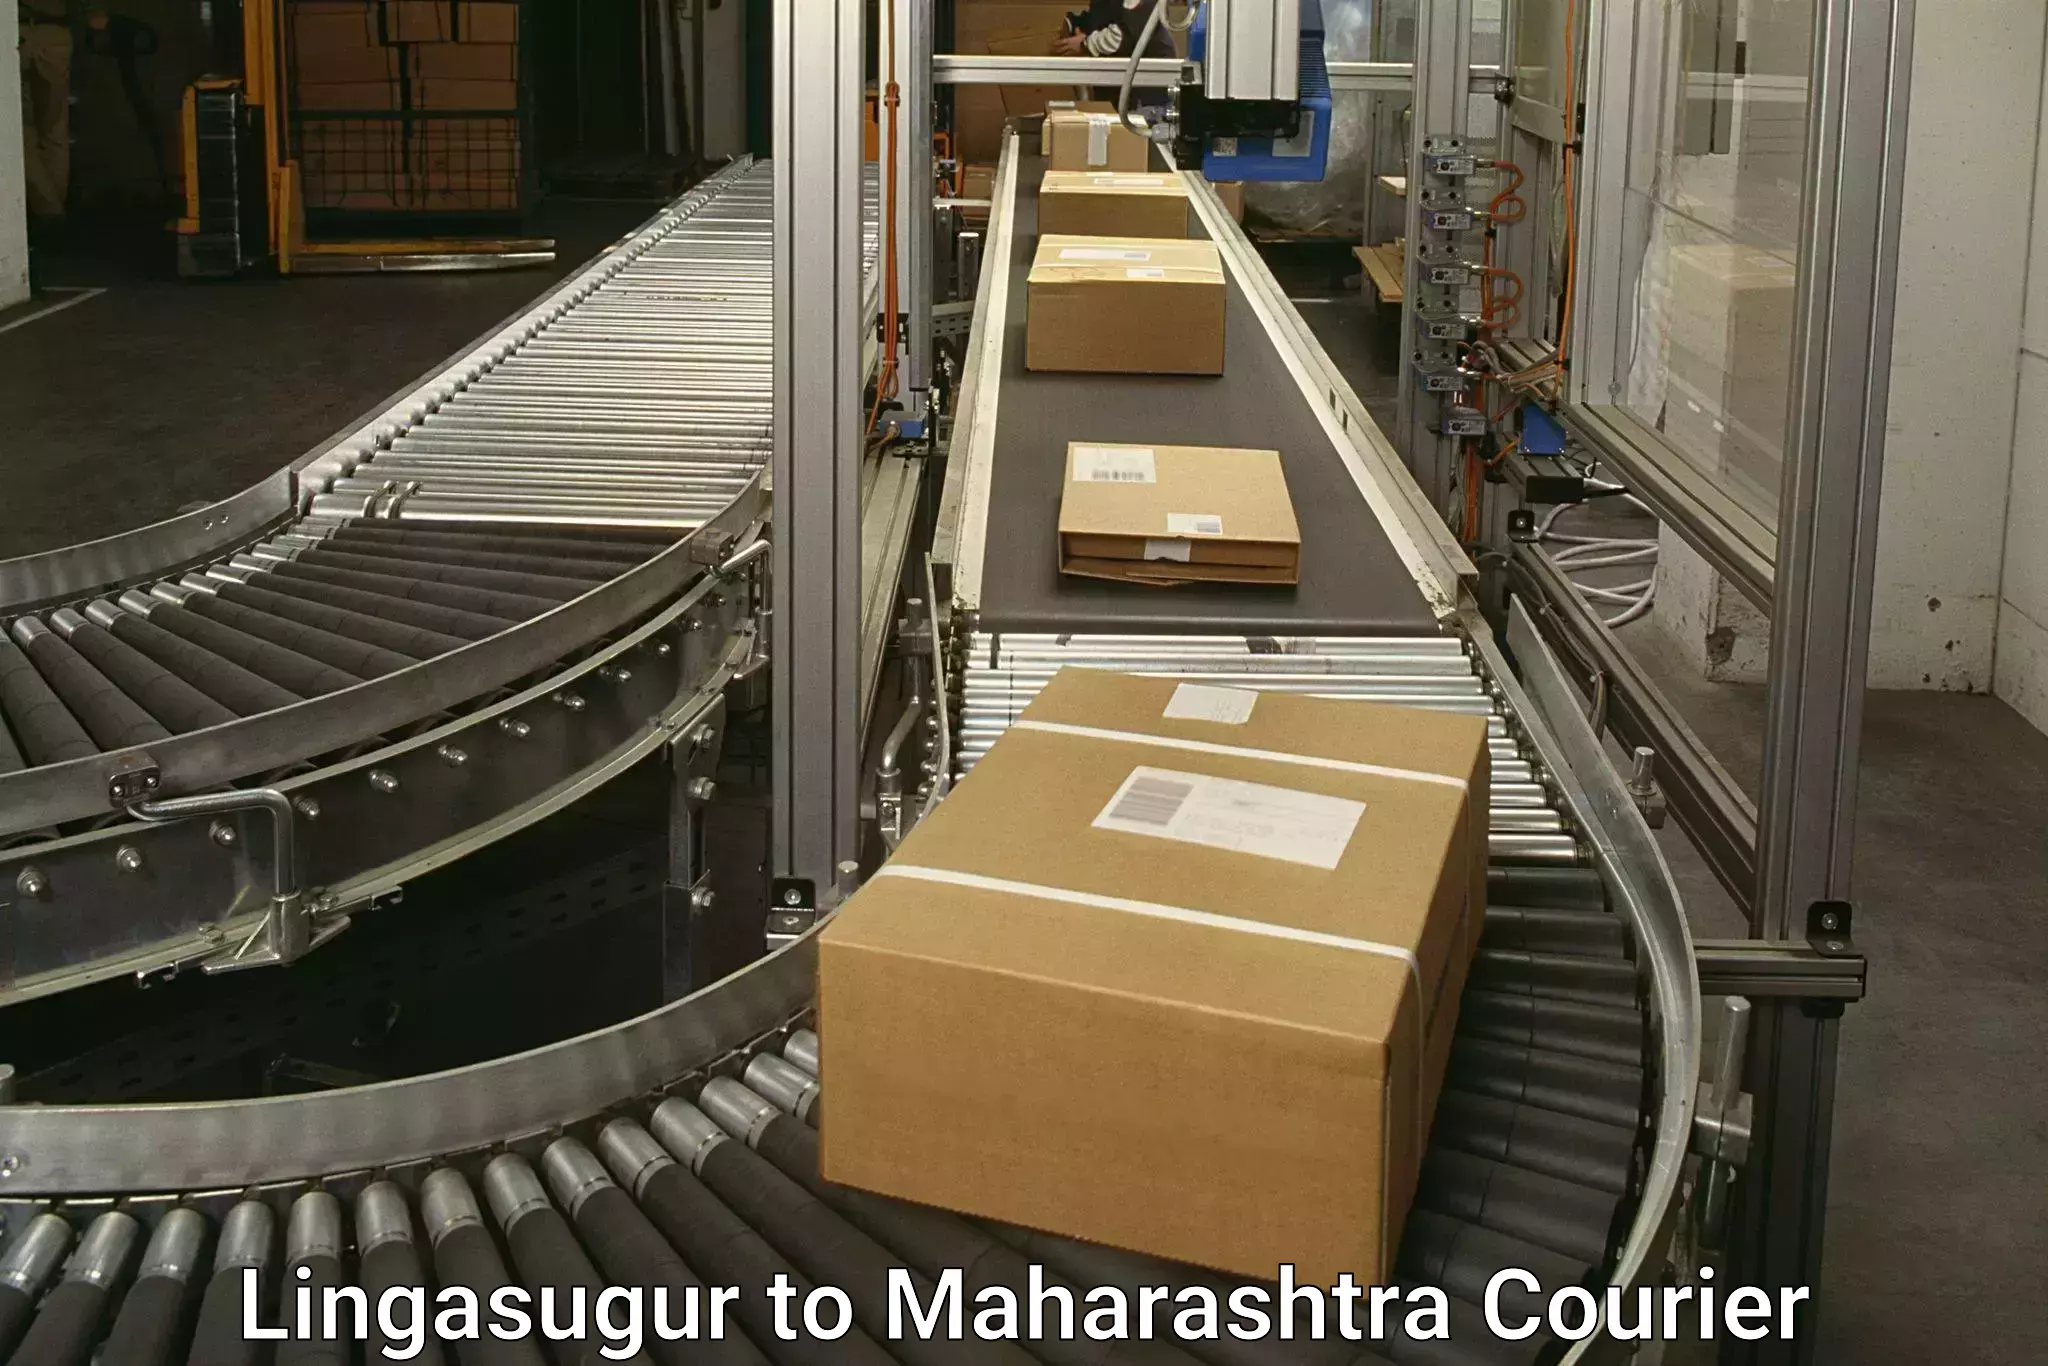 Courier service innovation Lingasugur to Mumbai Port